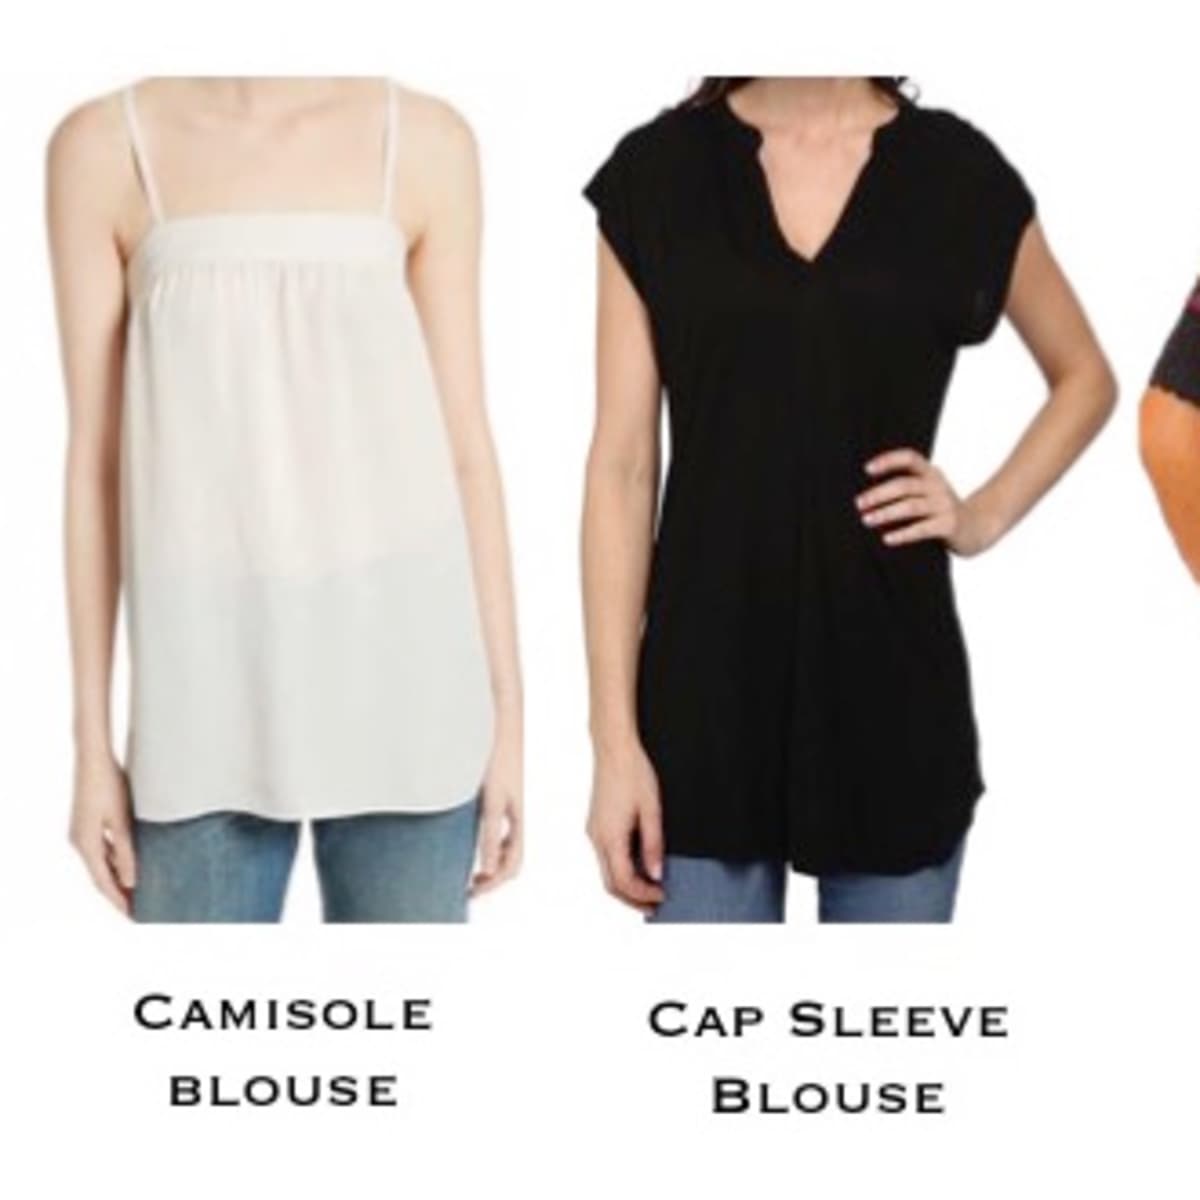 V-neck blouse, Top, Blouse, Slip-on blouse, Women's fashion